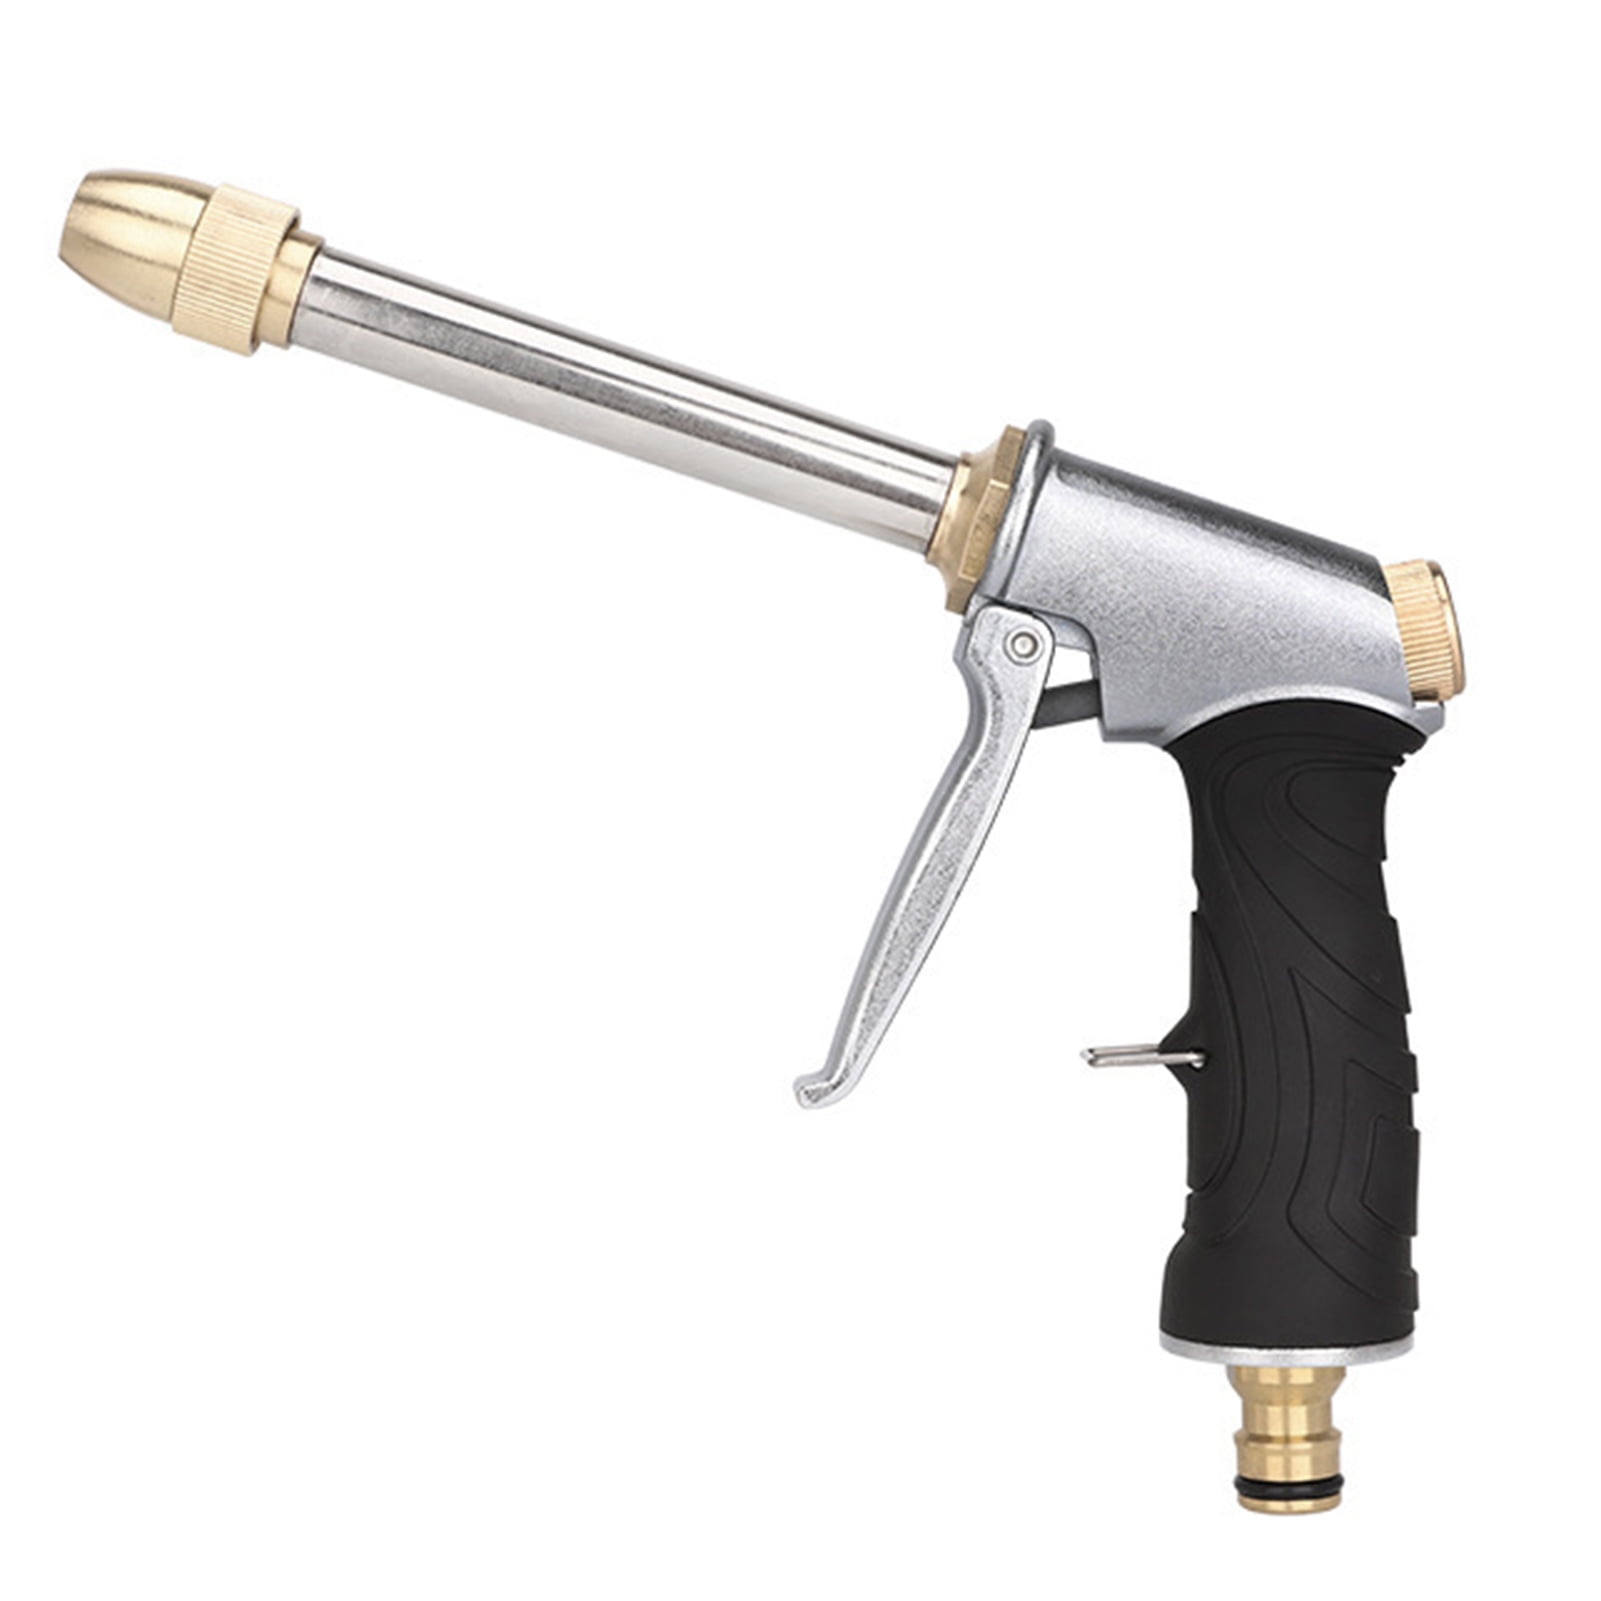 FIMCO 5273959 Pistol Grip Handgun for sale online 